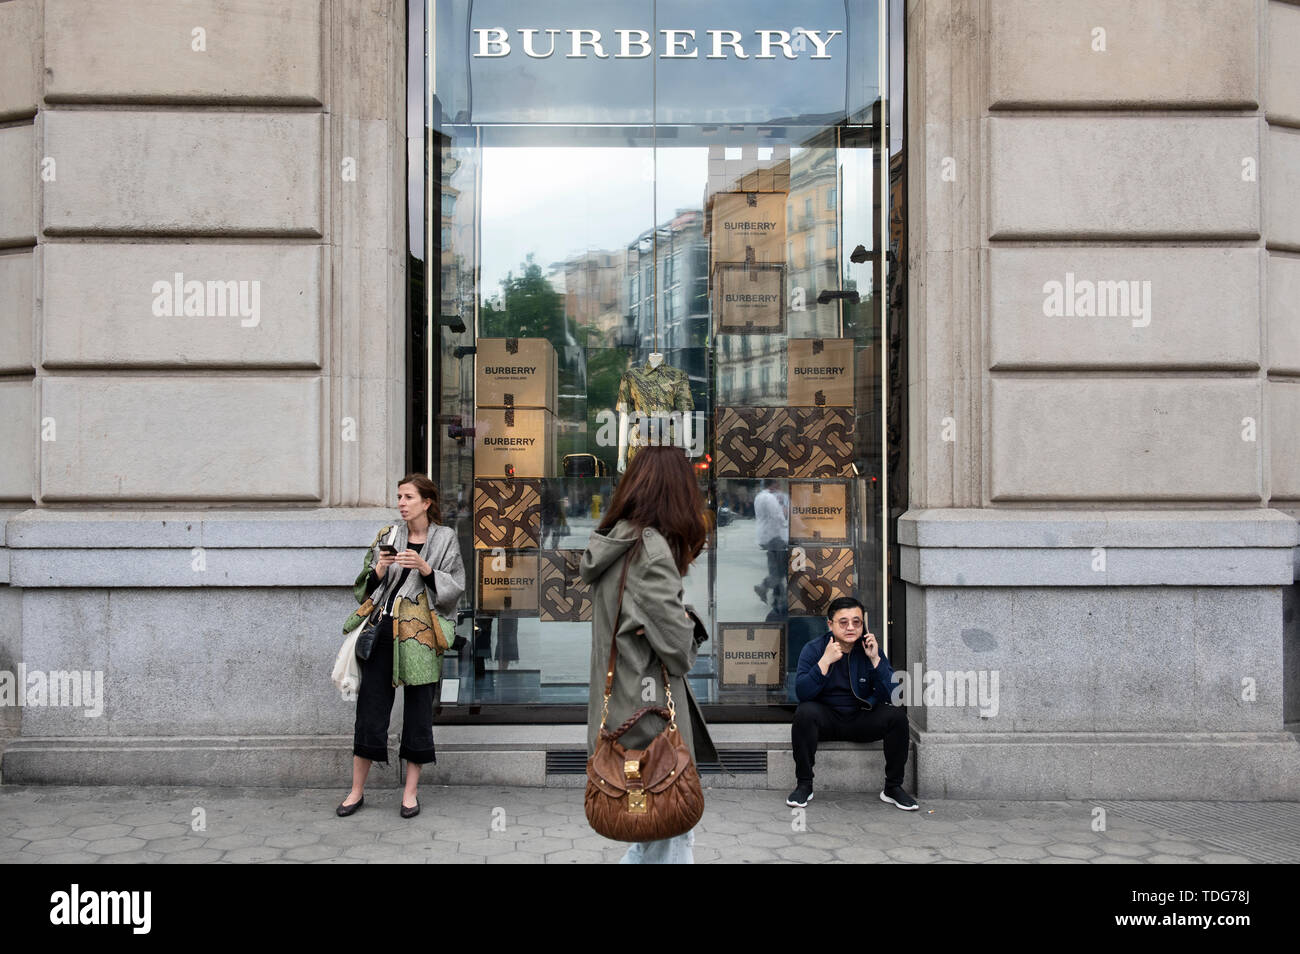 British luxury fashion brand Burberry store seen in Spain Stock Photo -  Alamy